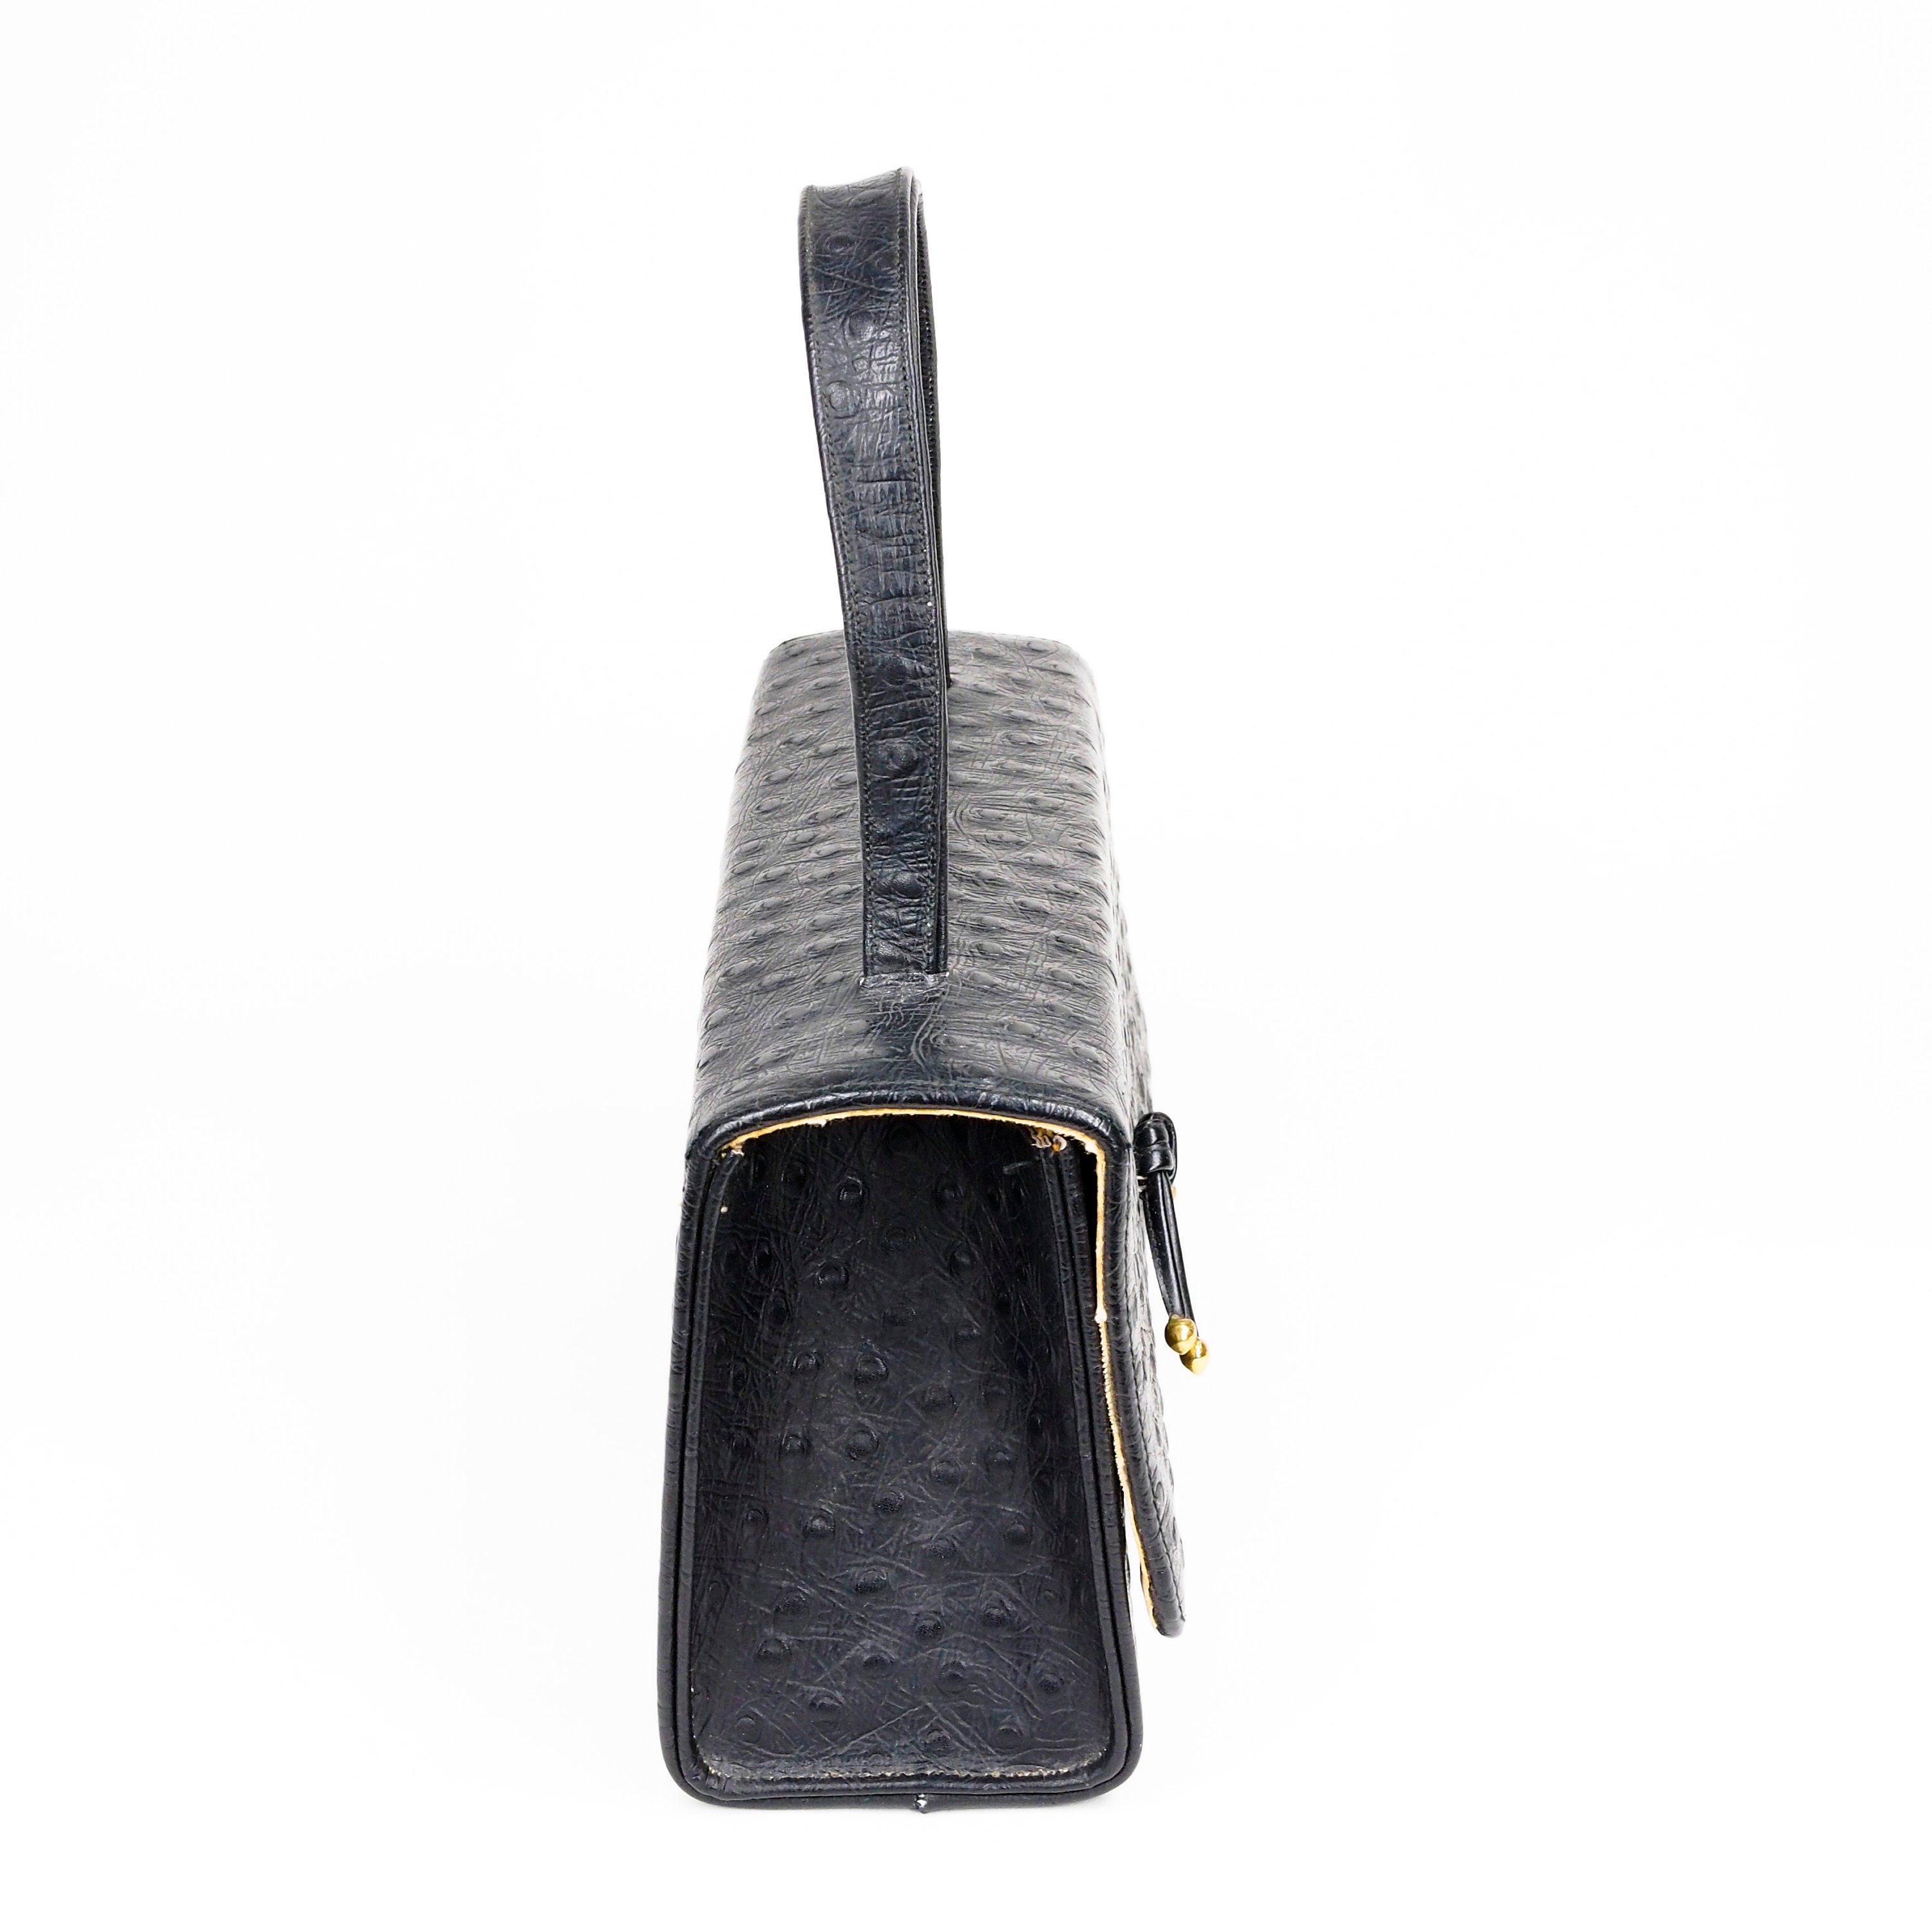 Rare Vintage 50s 60s Hard-Sided Rectangle Box Bag: Black Tassel Accent Ostrich Texture Top Handle Handbag Purse Saddle Mid Century Modern